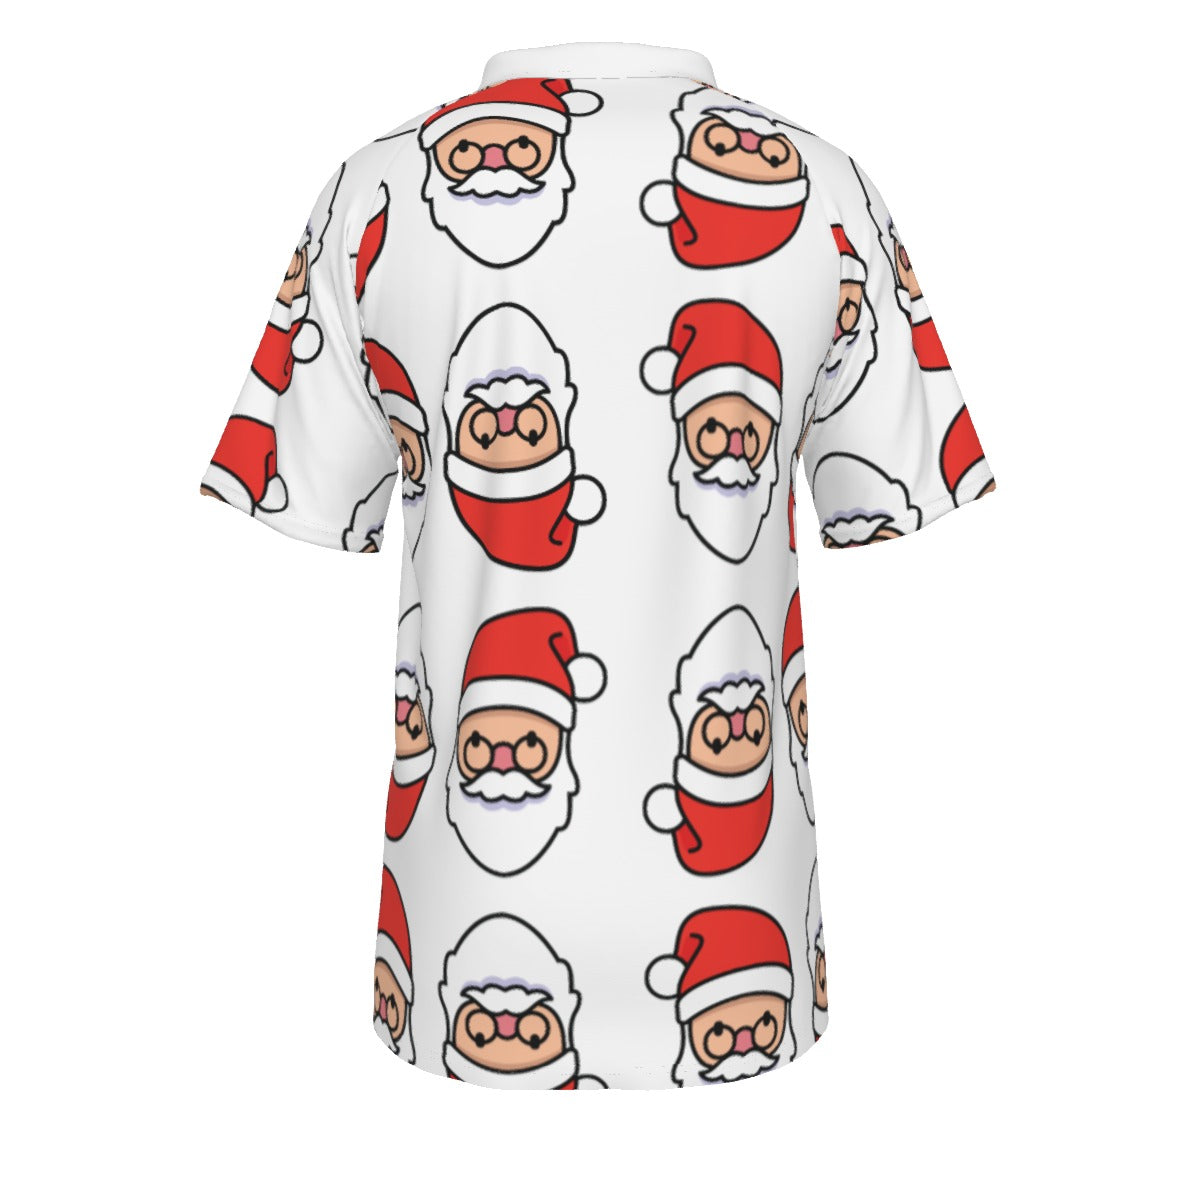 Men's Short Sleeve Christmas Polo Shirt - Mirrored Santa